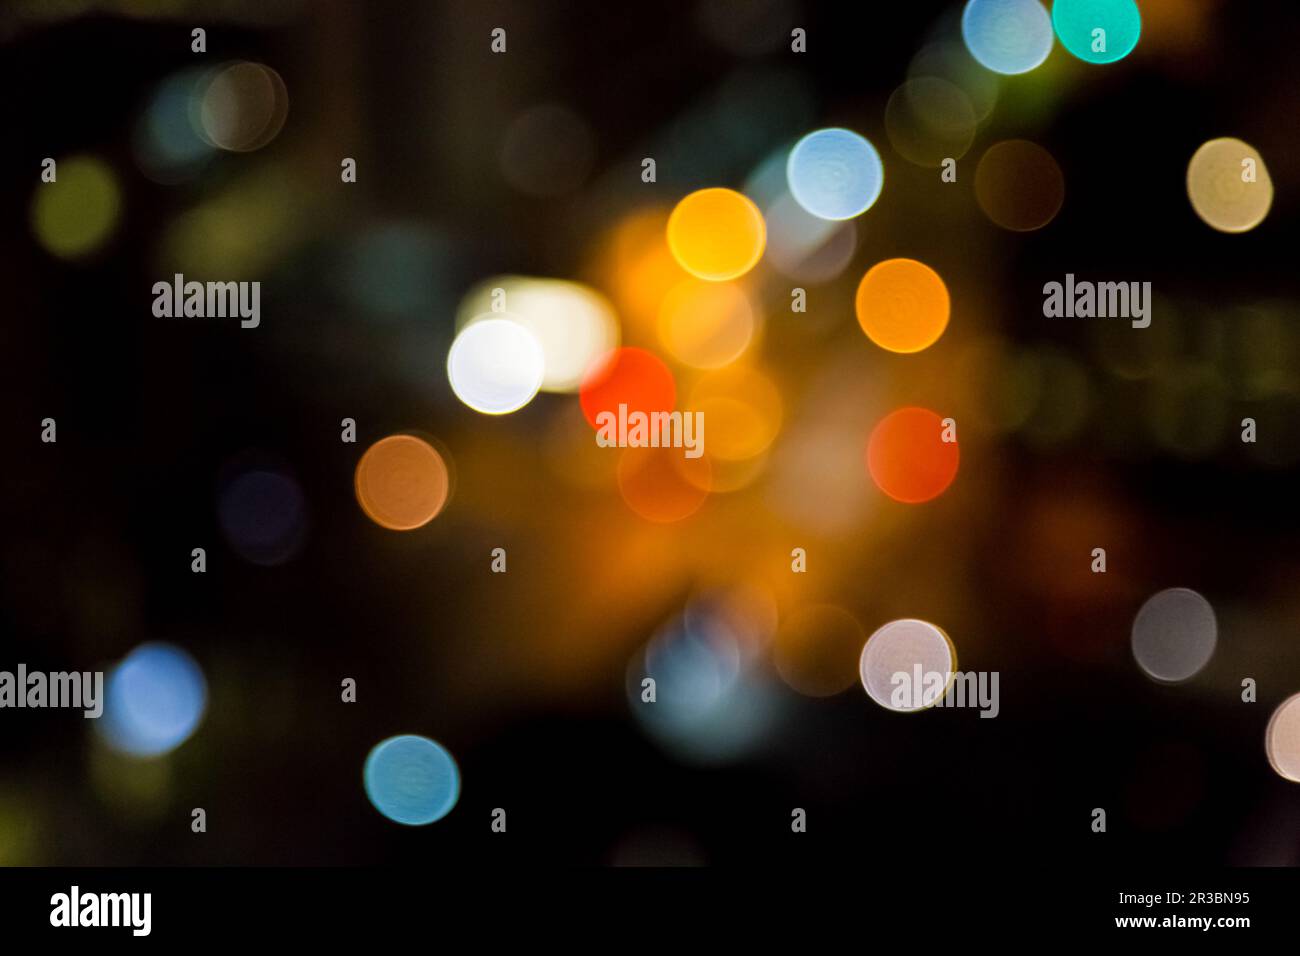 Bokeh blurred lights design pattern Stock Photo